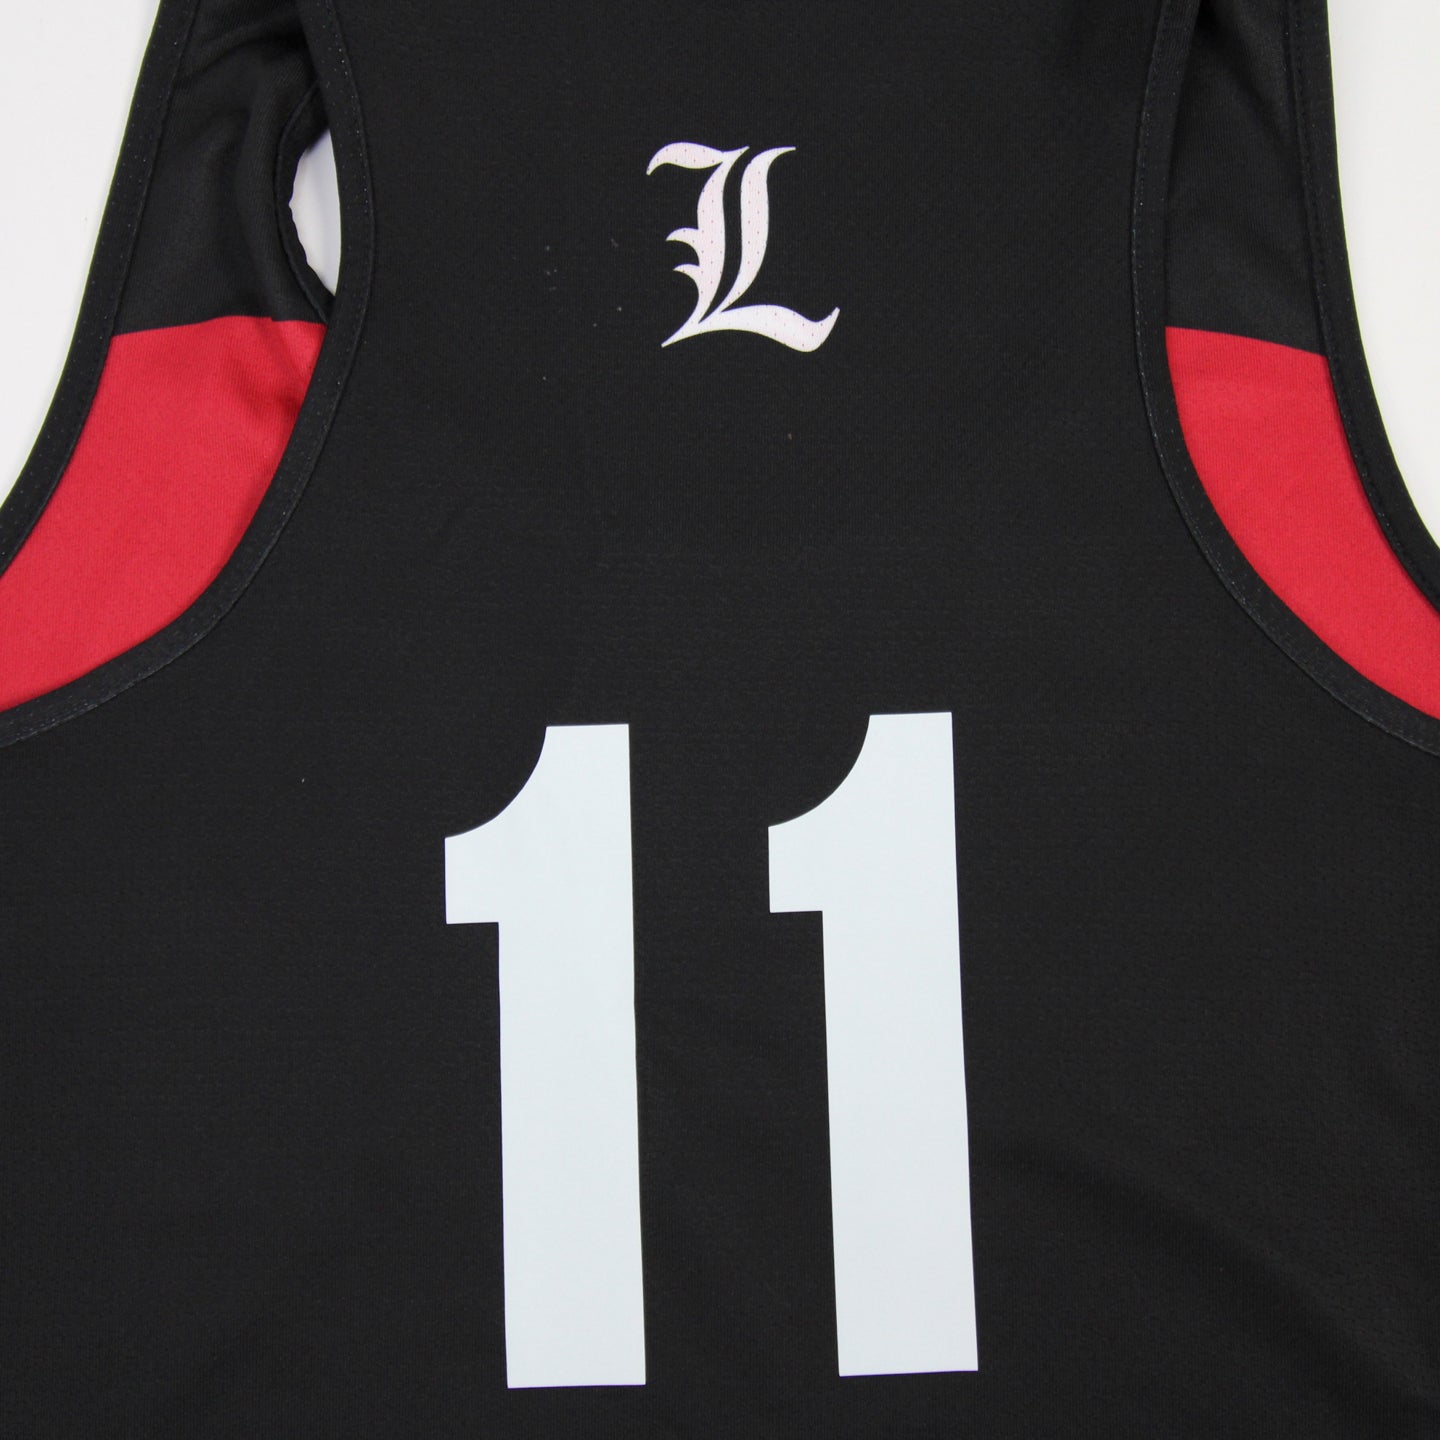 Louisville Cardinals adidas Practice Jersey - Basketball Men's  Black/Red New